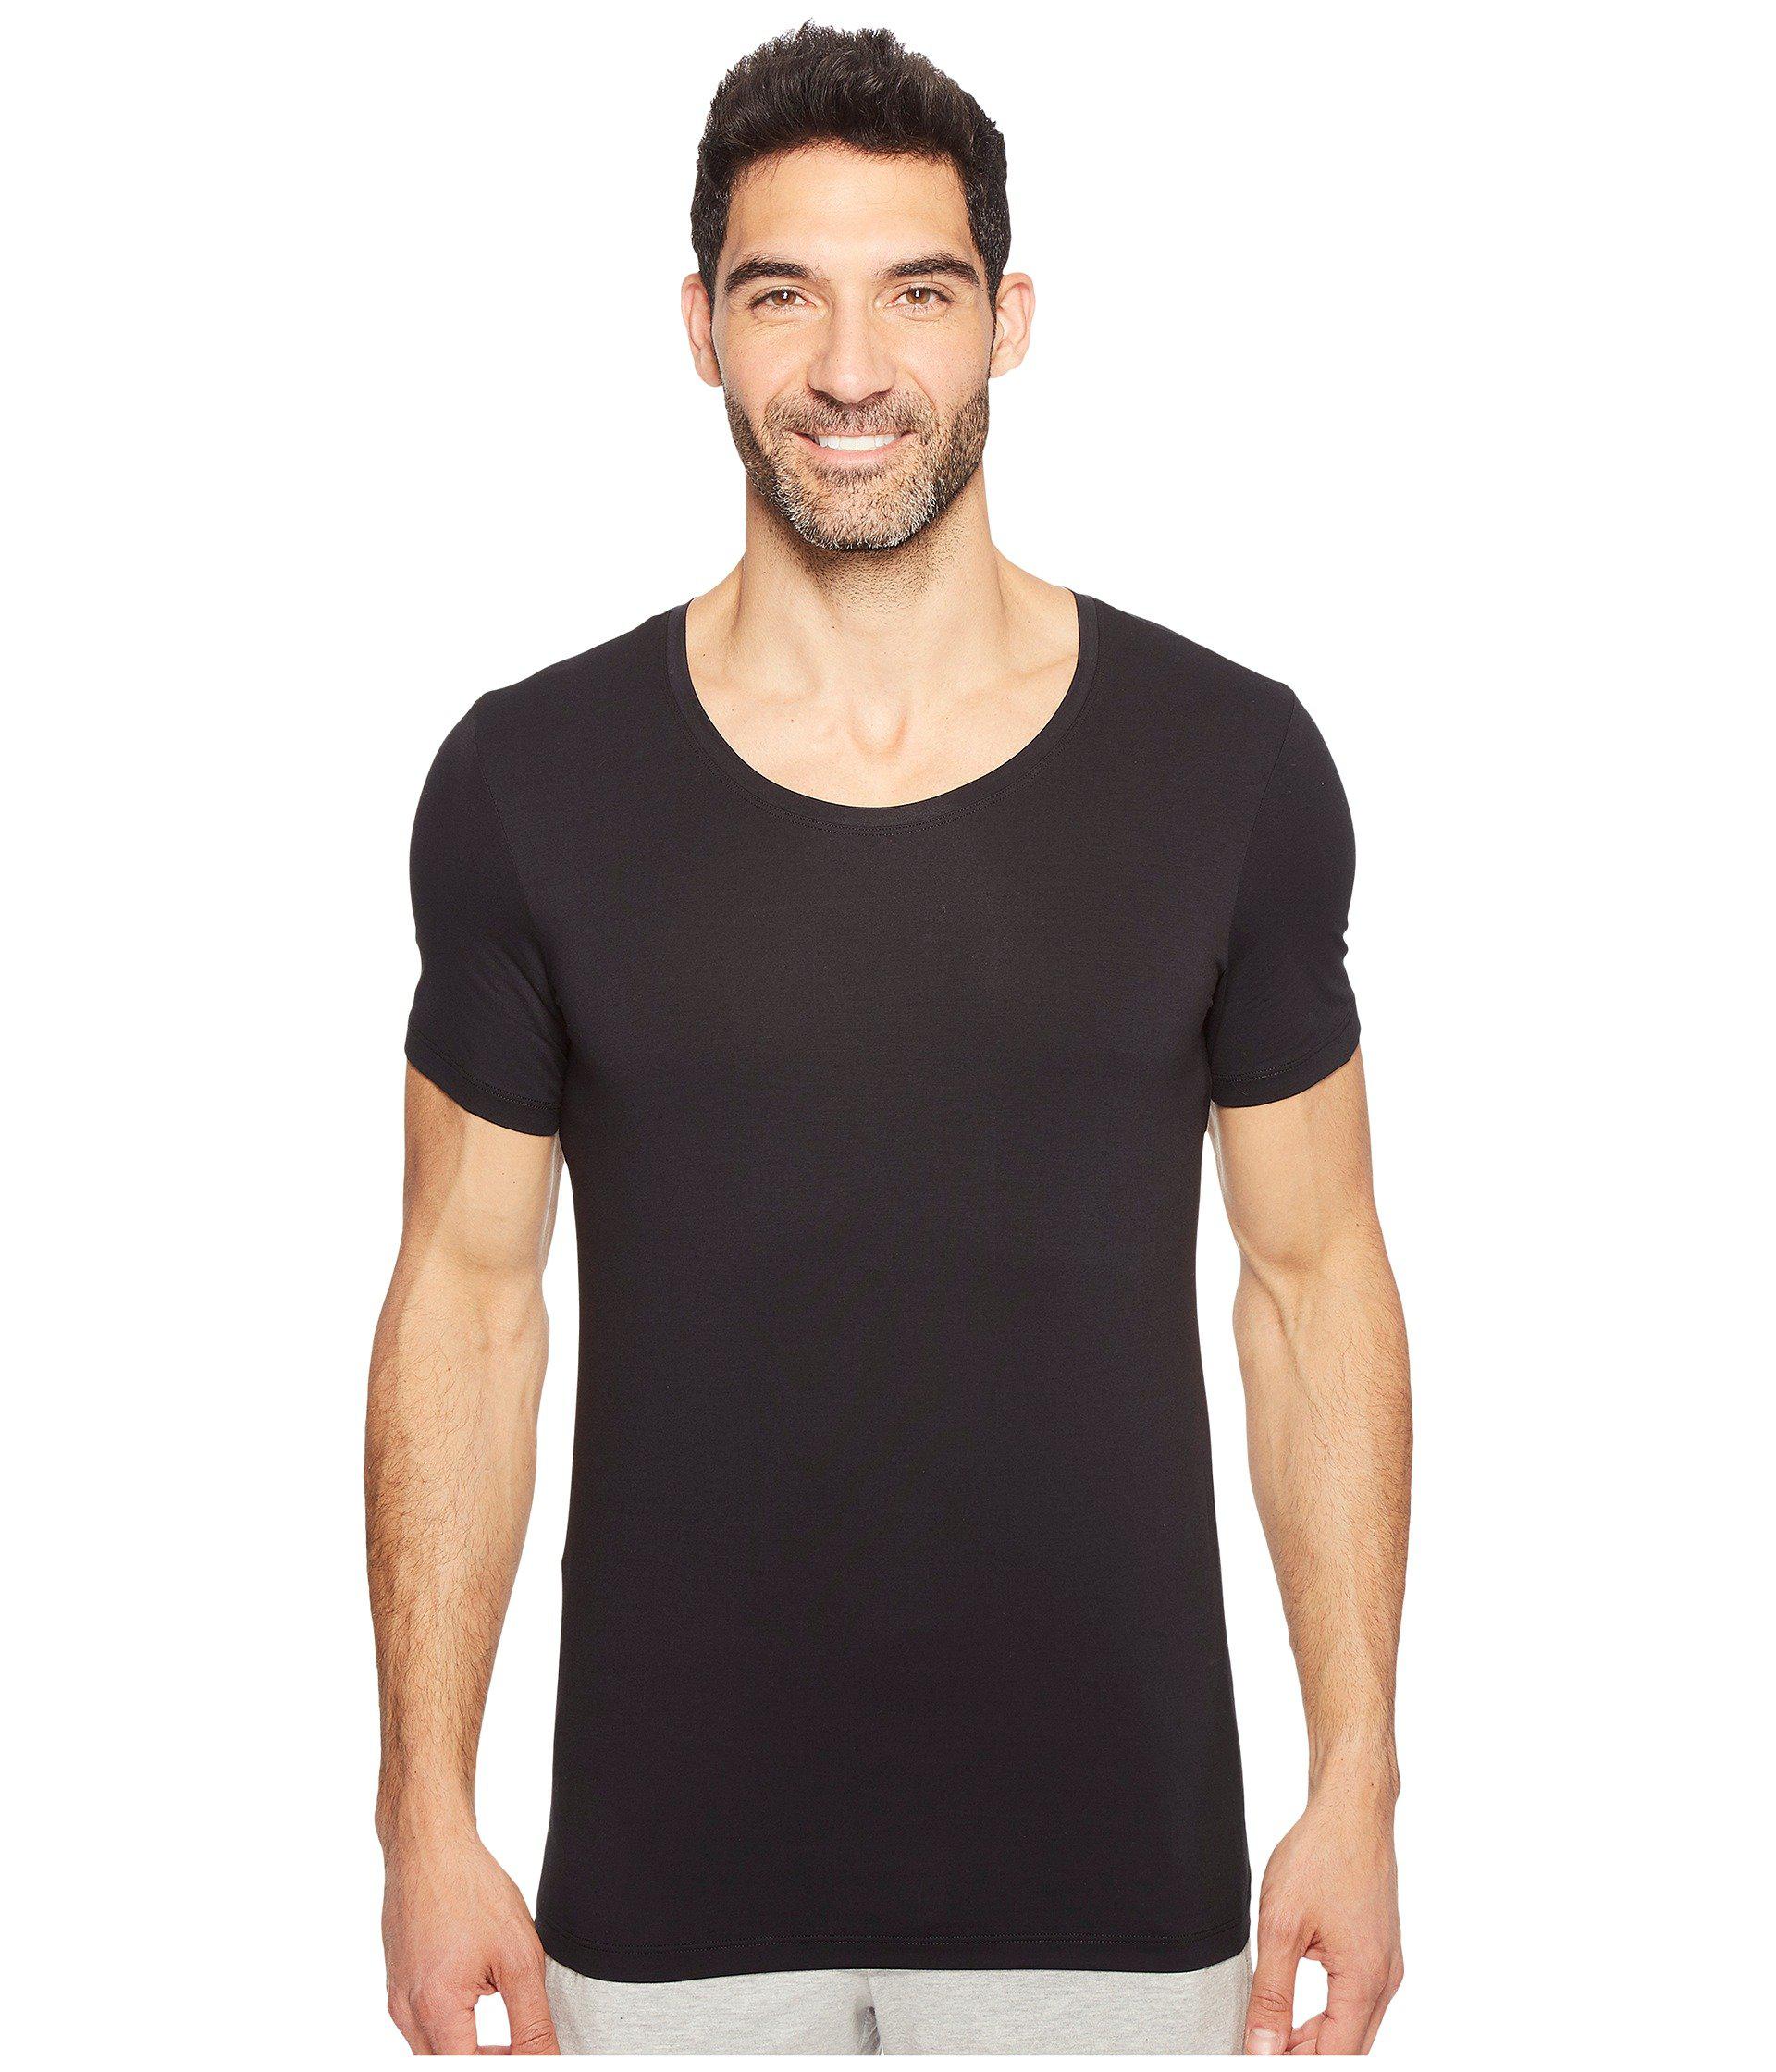 Hanro Cotton Superior Short Sleeve Crew Neck Shirt in Black for Men - Lyst